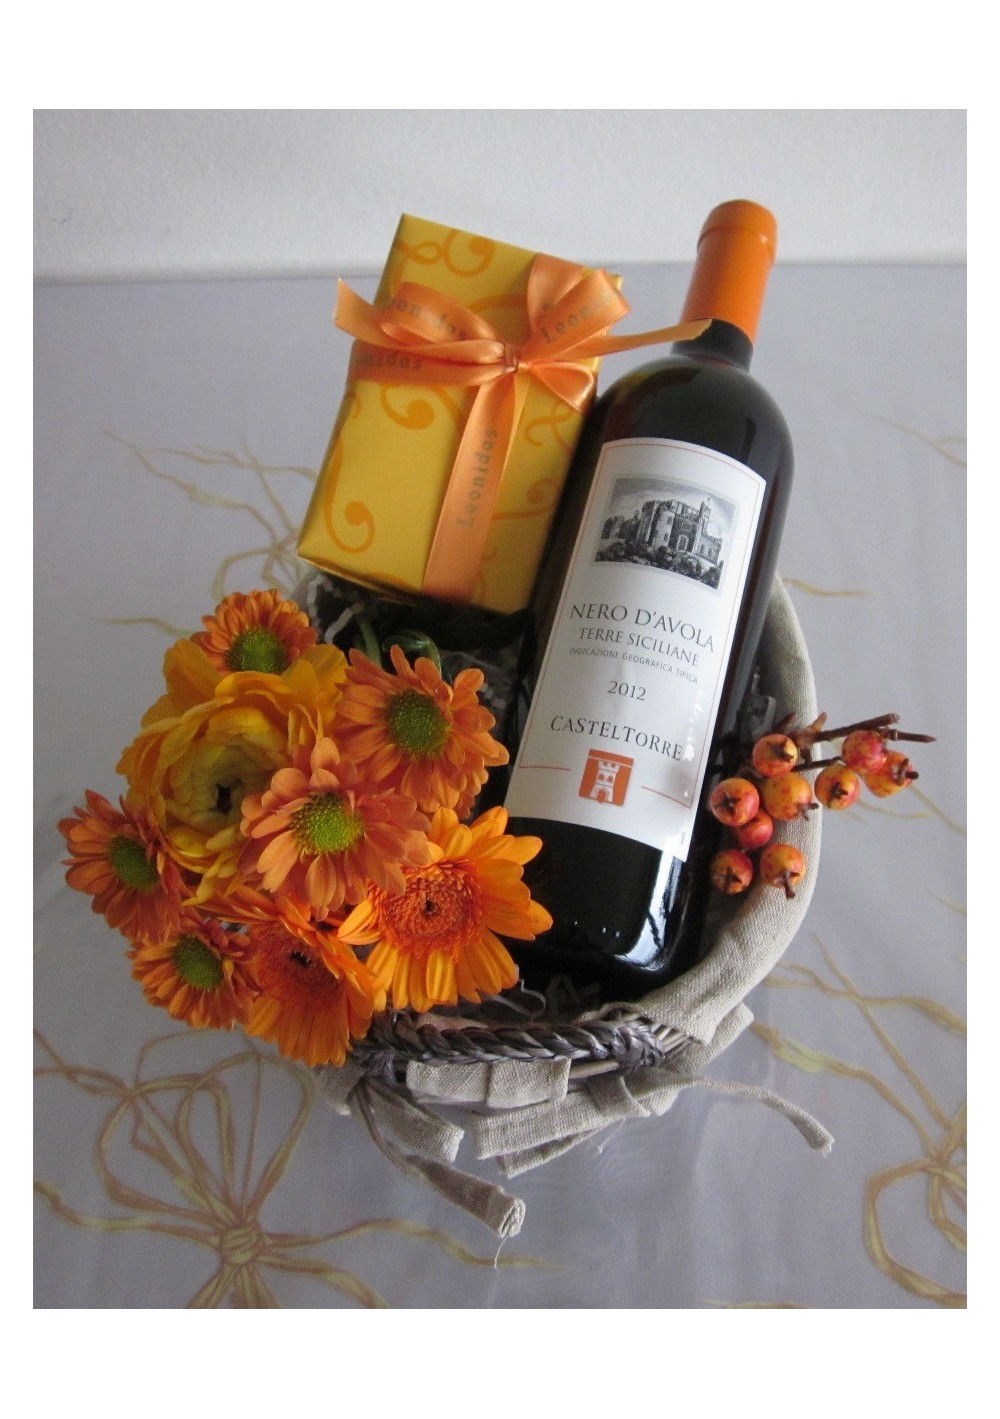 birthday gift basket - Italian wine